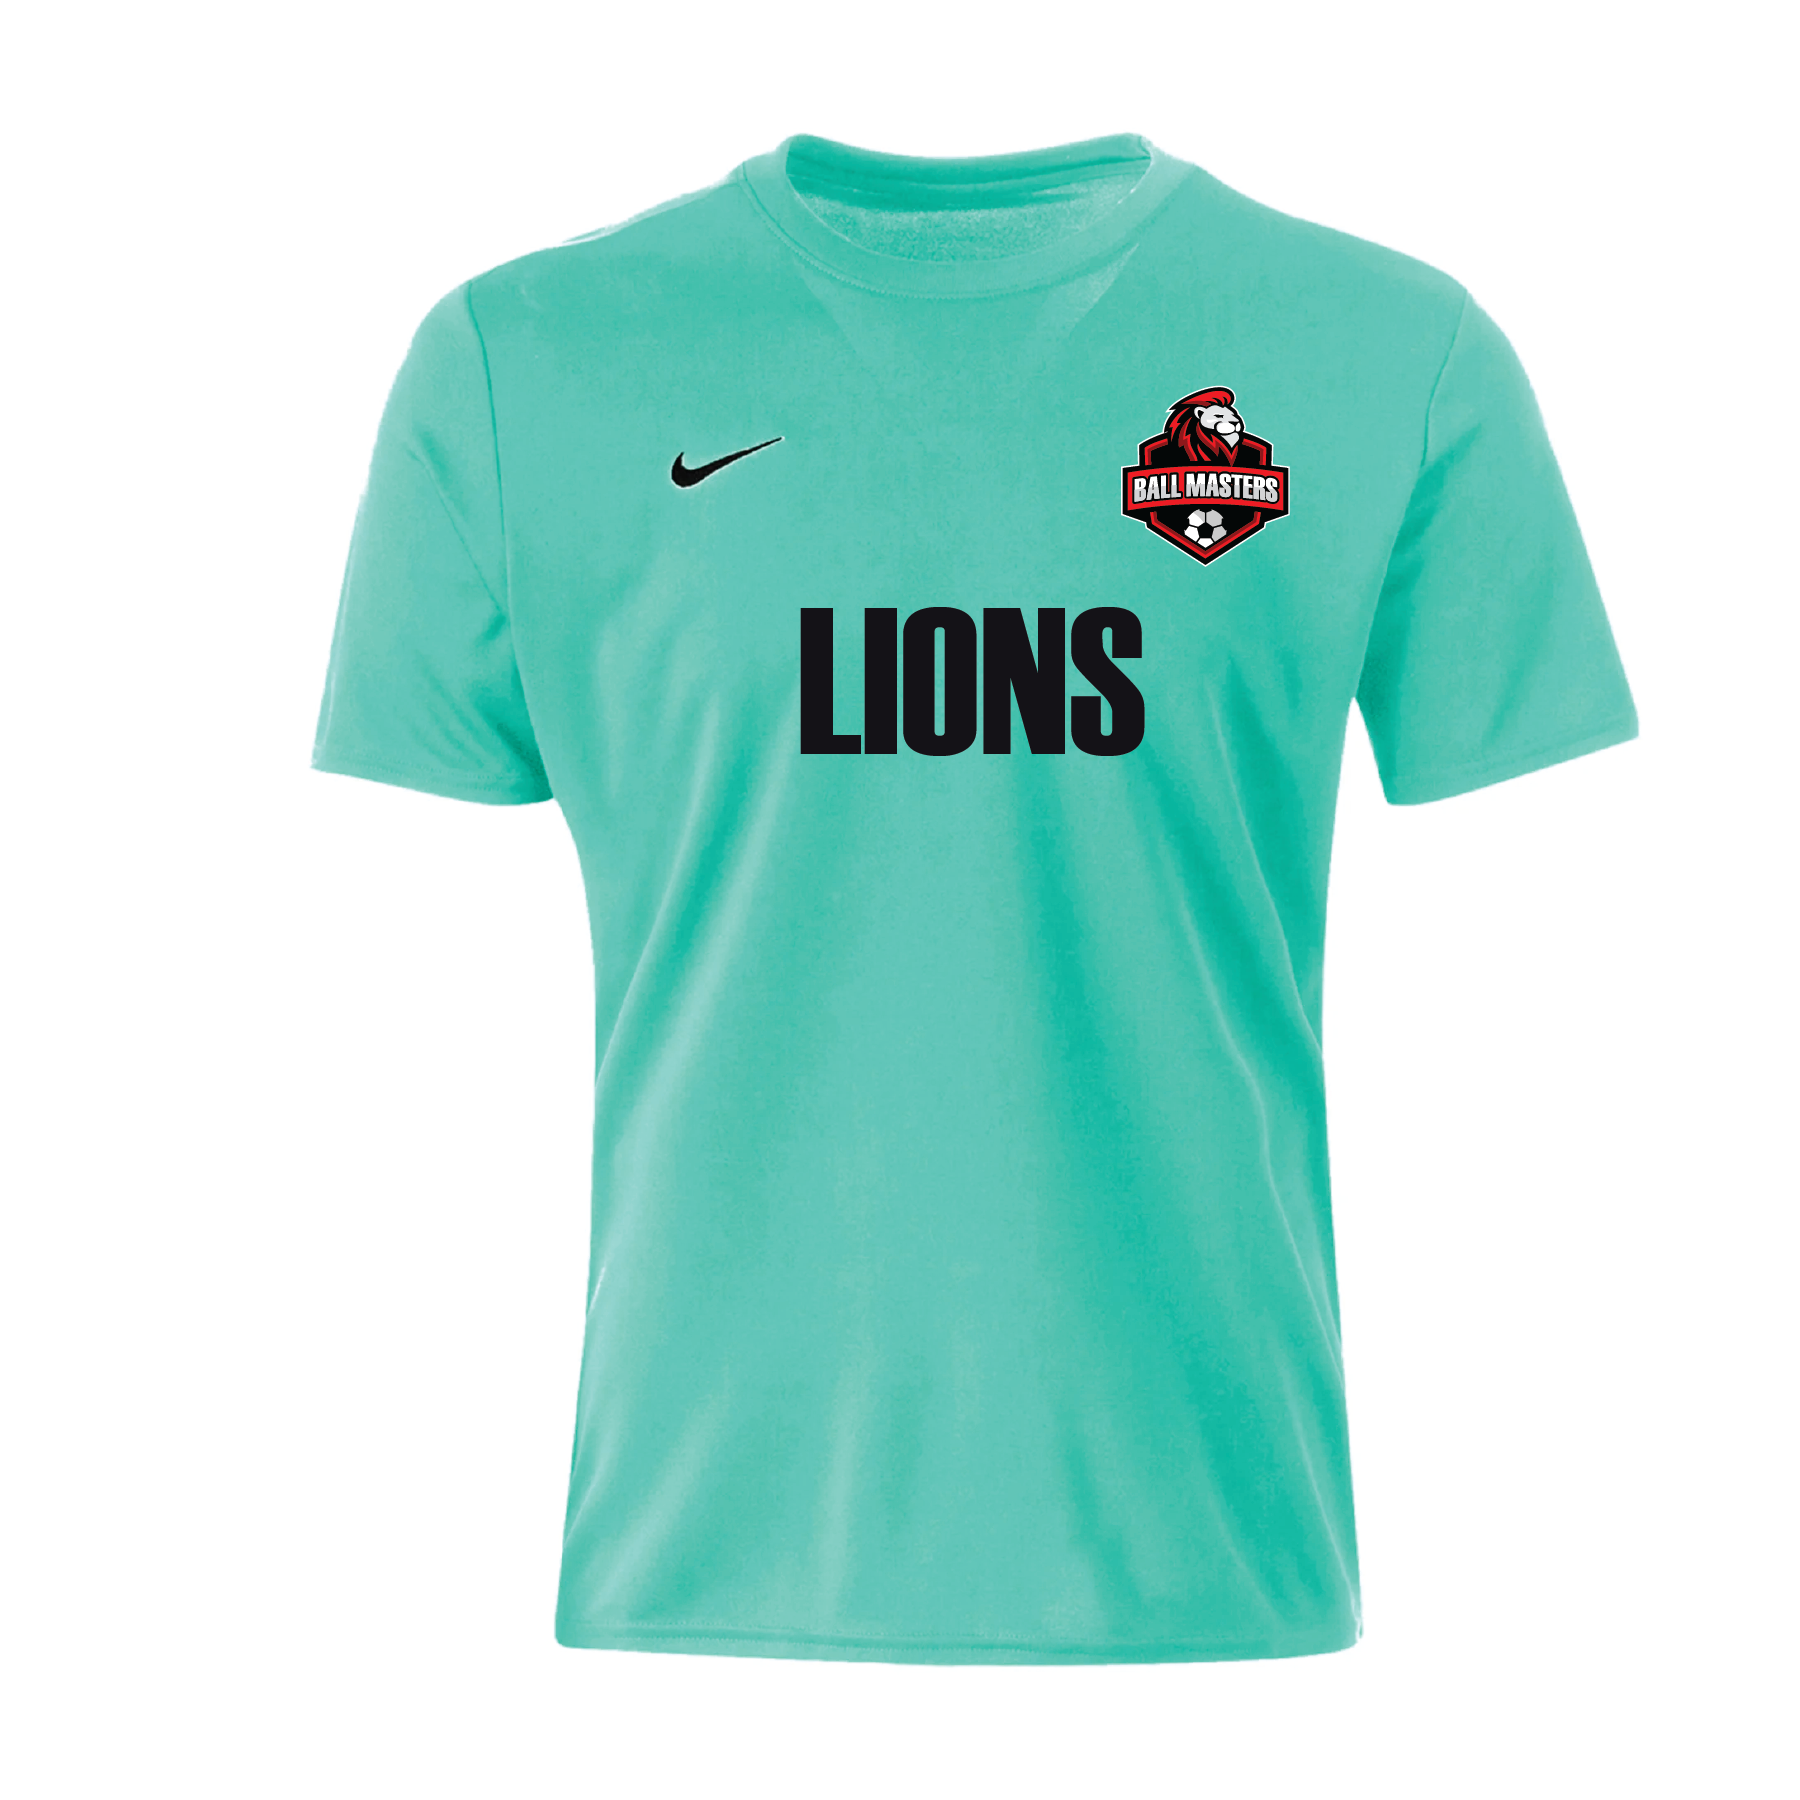 Lions Nike jersey